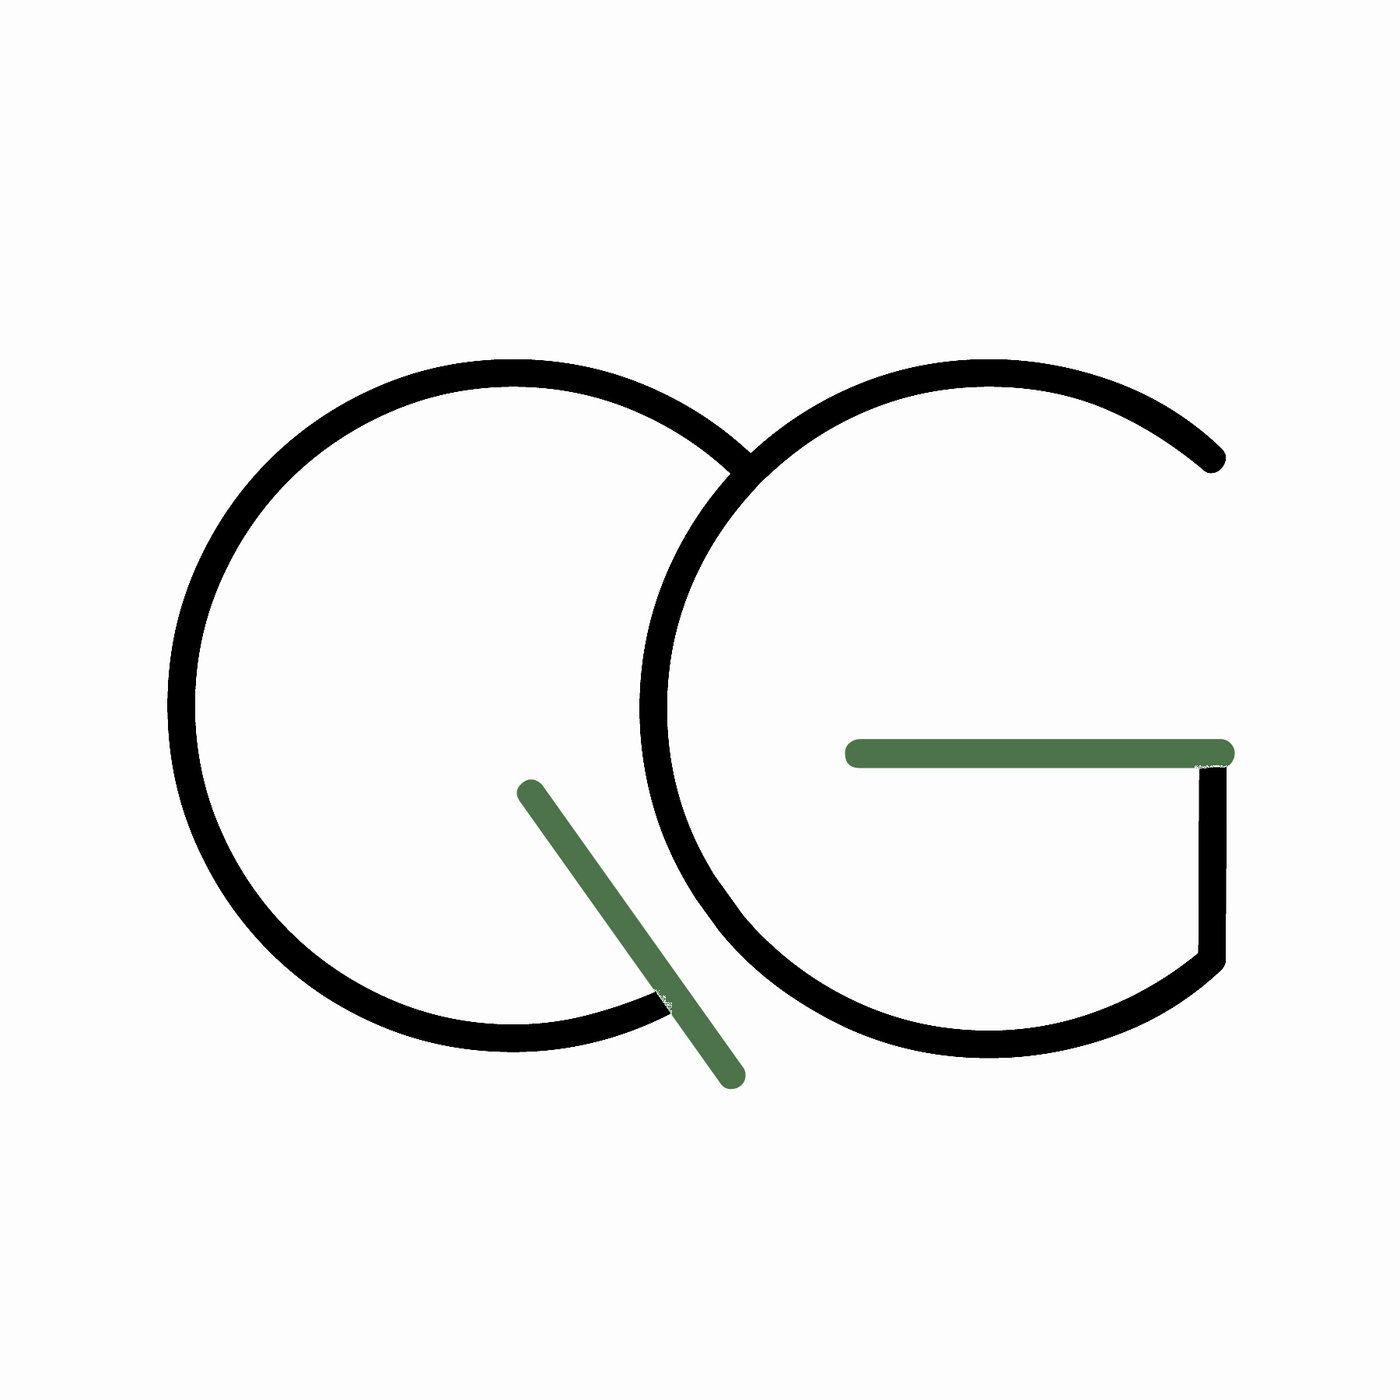 Qg Logo - QG exploration by Ashley Fouyolle at Coroflot.com